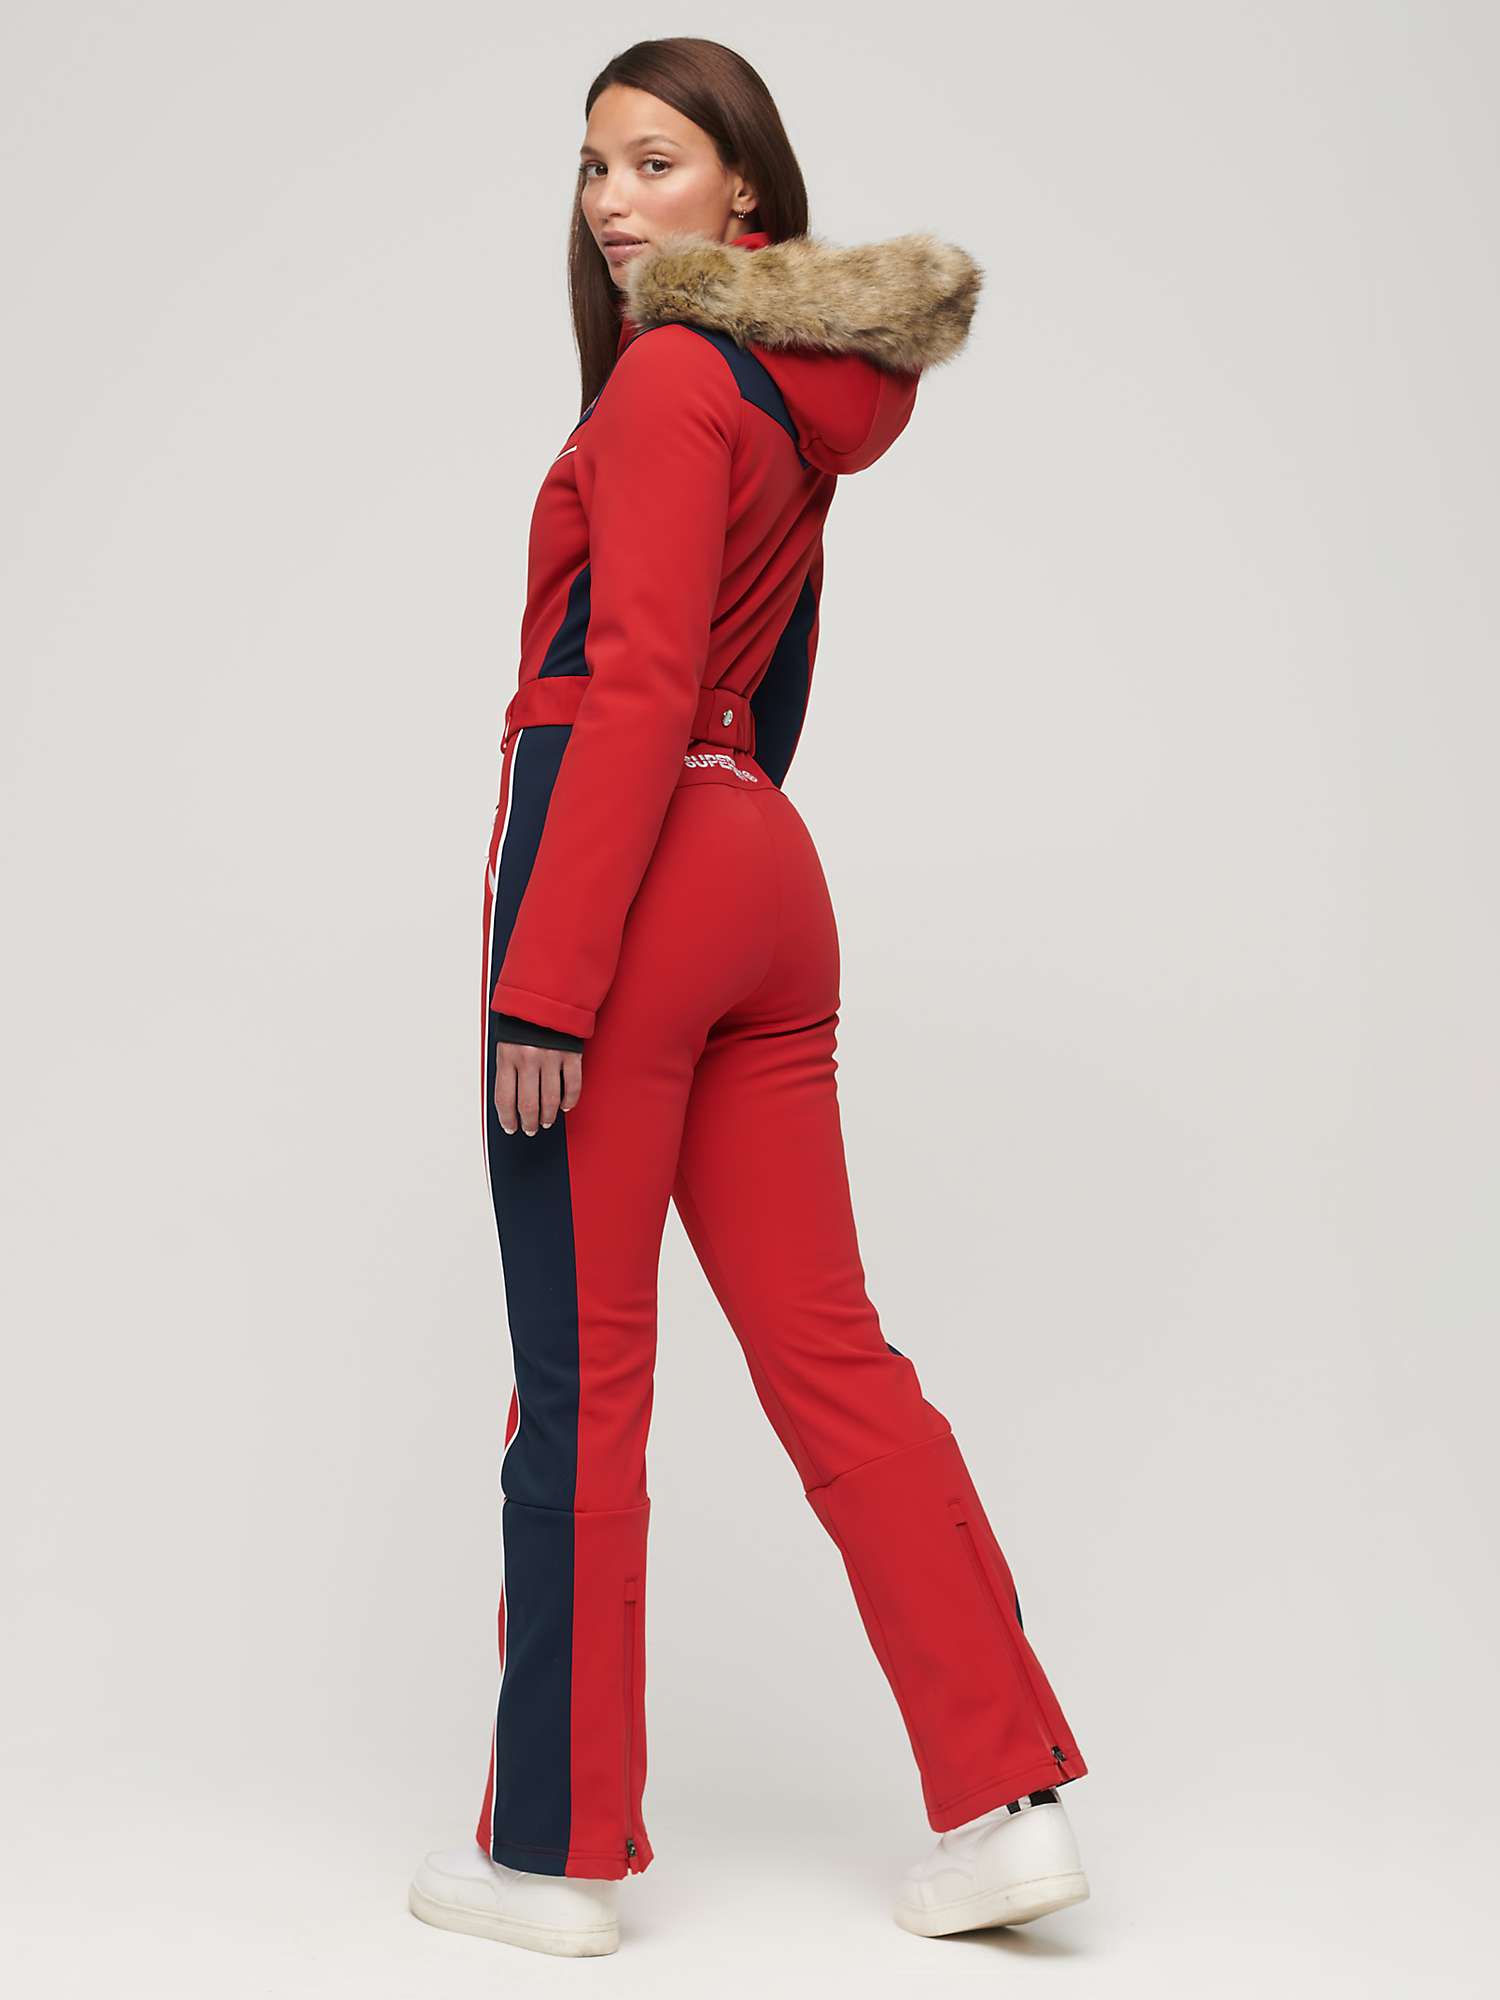 Buy Superdry Women's Ski Suit Online at johnlewis.com